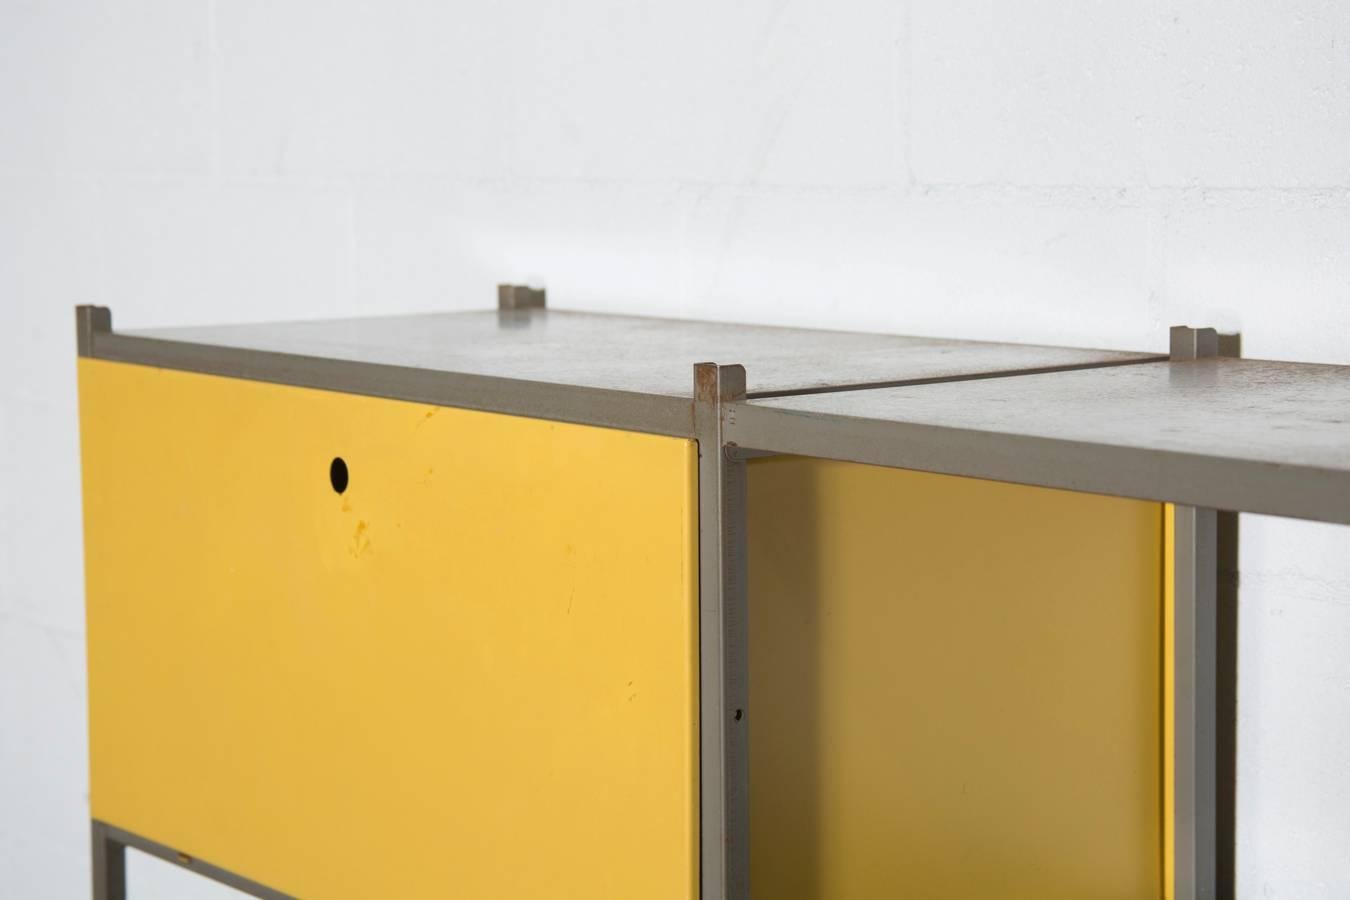 Enameled Wim Rietveld Industrial Metal Cabinet #663-2 for Gispen